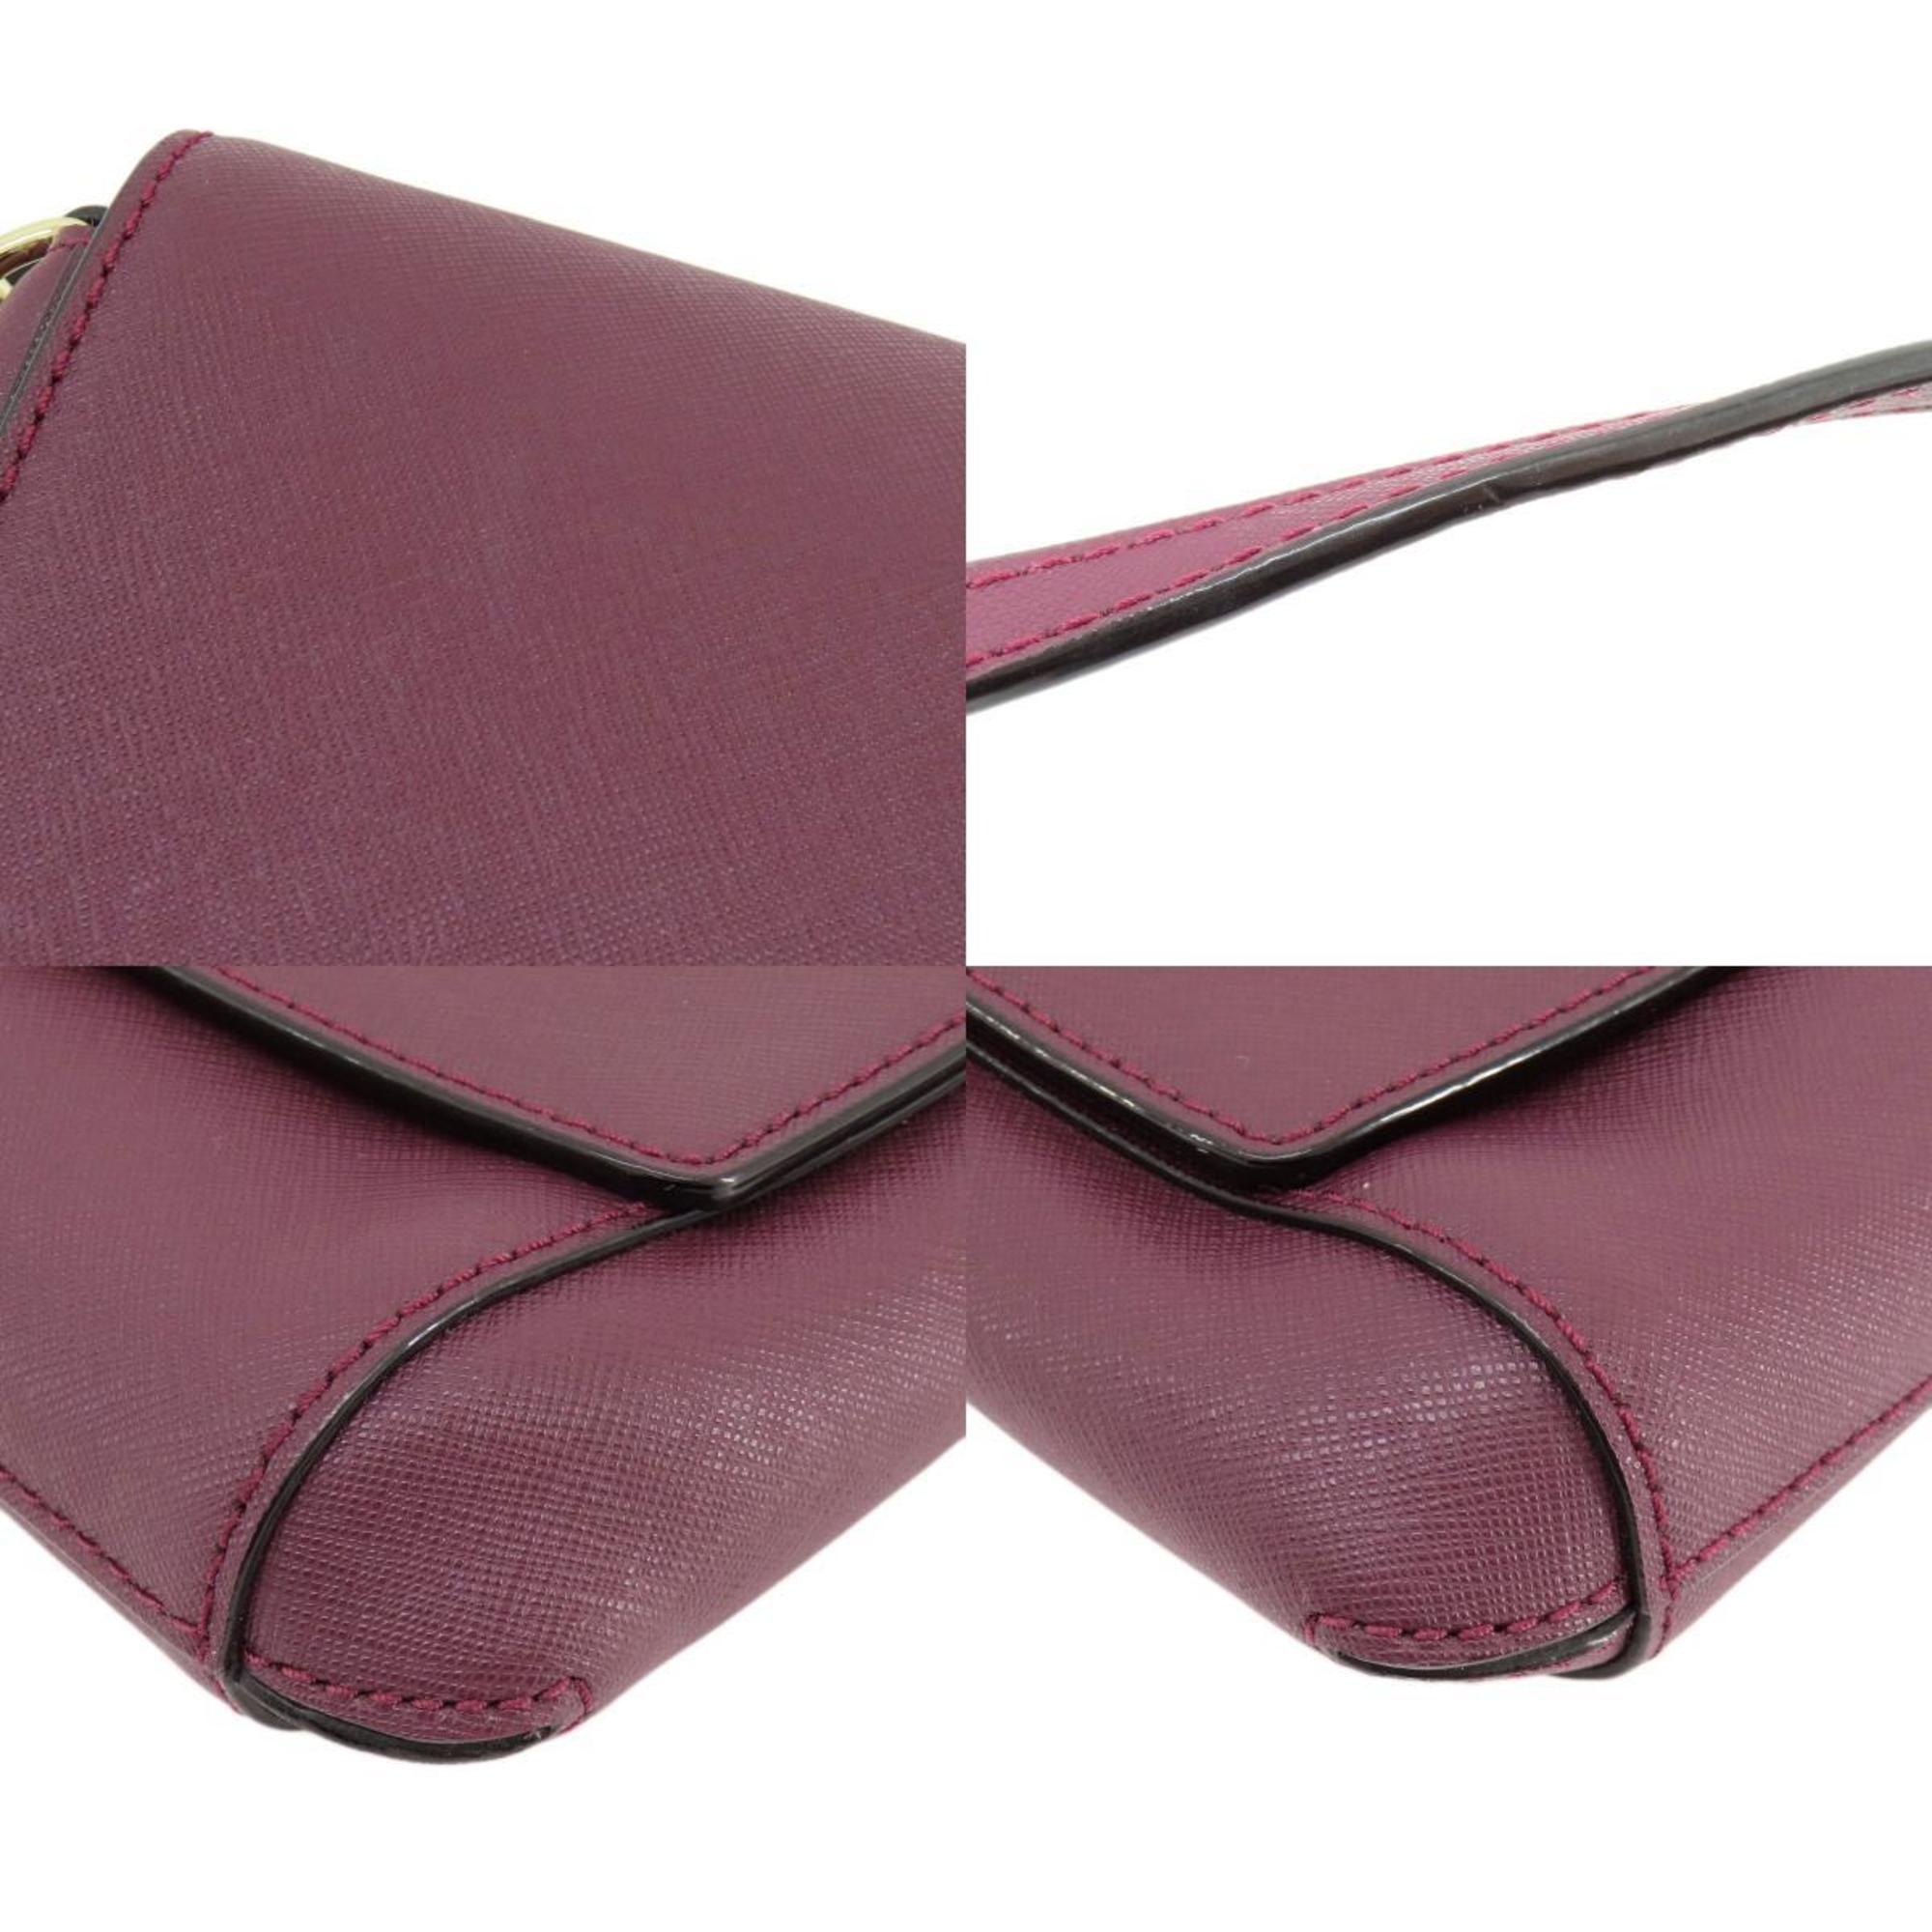 Kate Spade PVC handbag for women